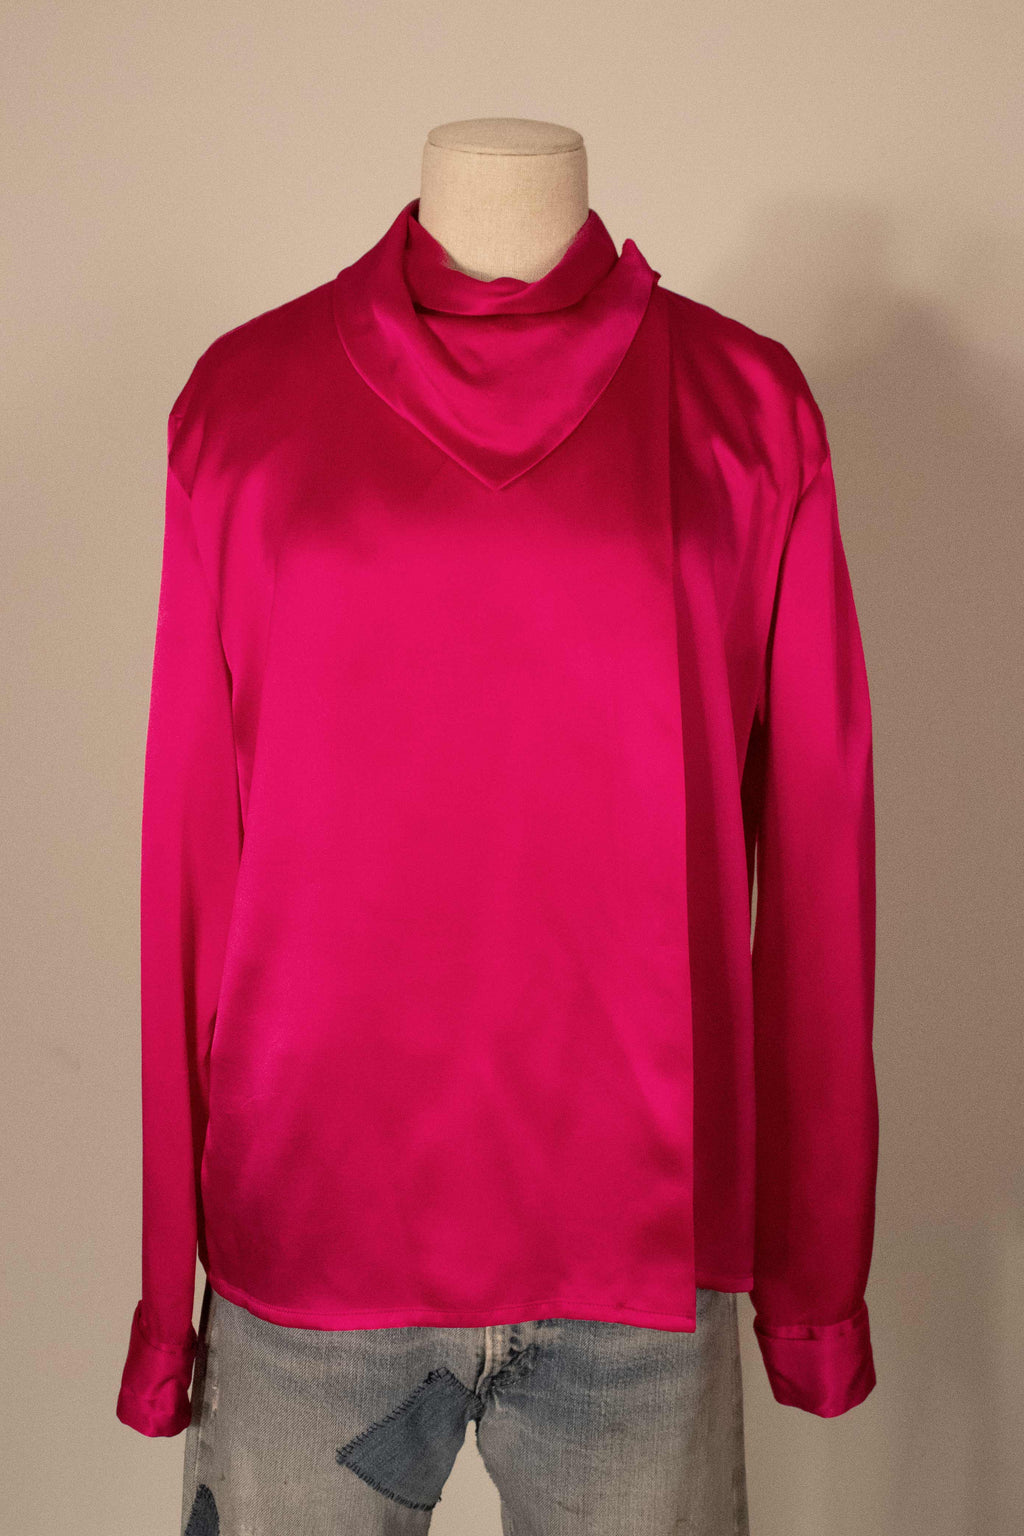 Revillon fuschia silk caplet blouse